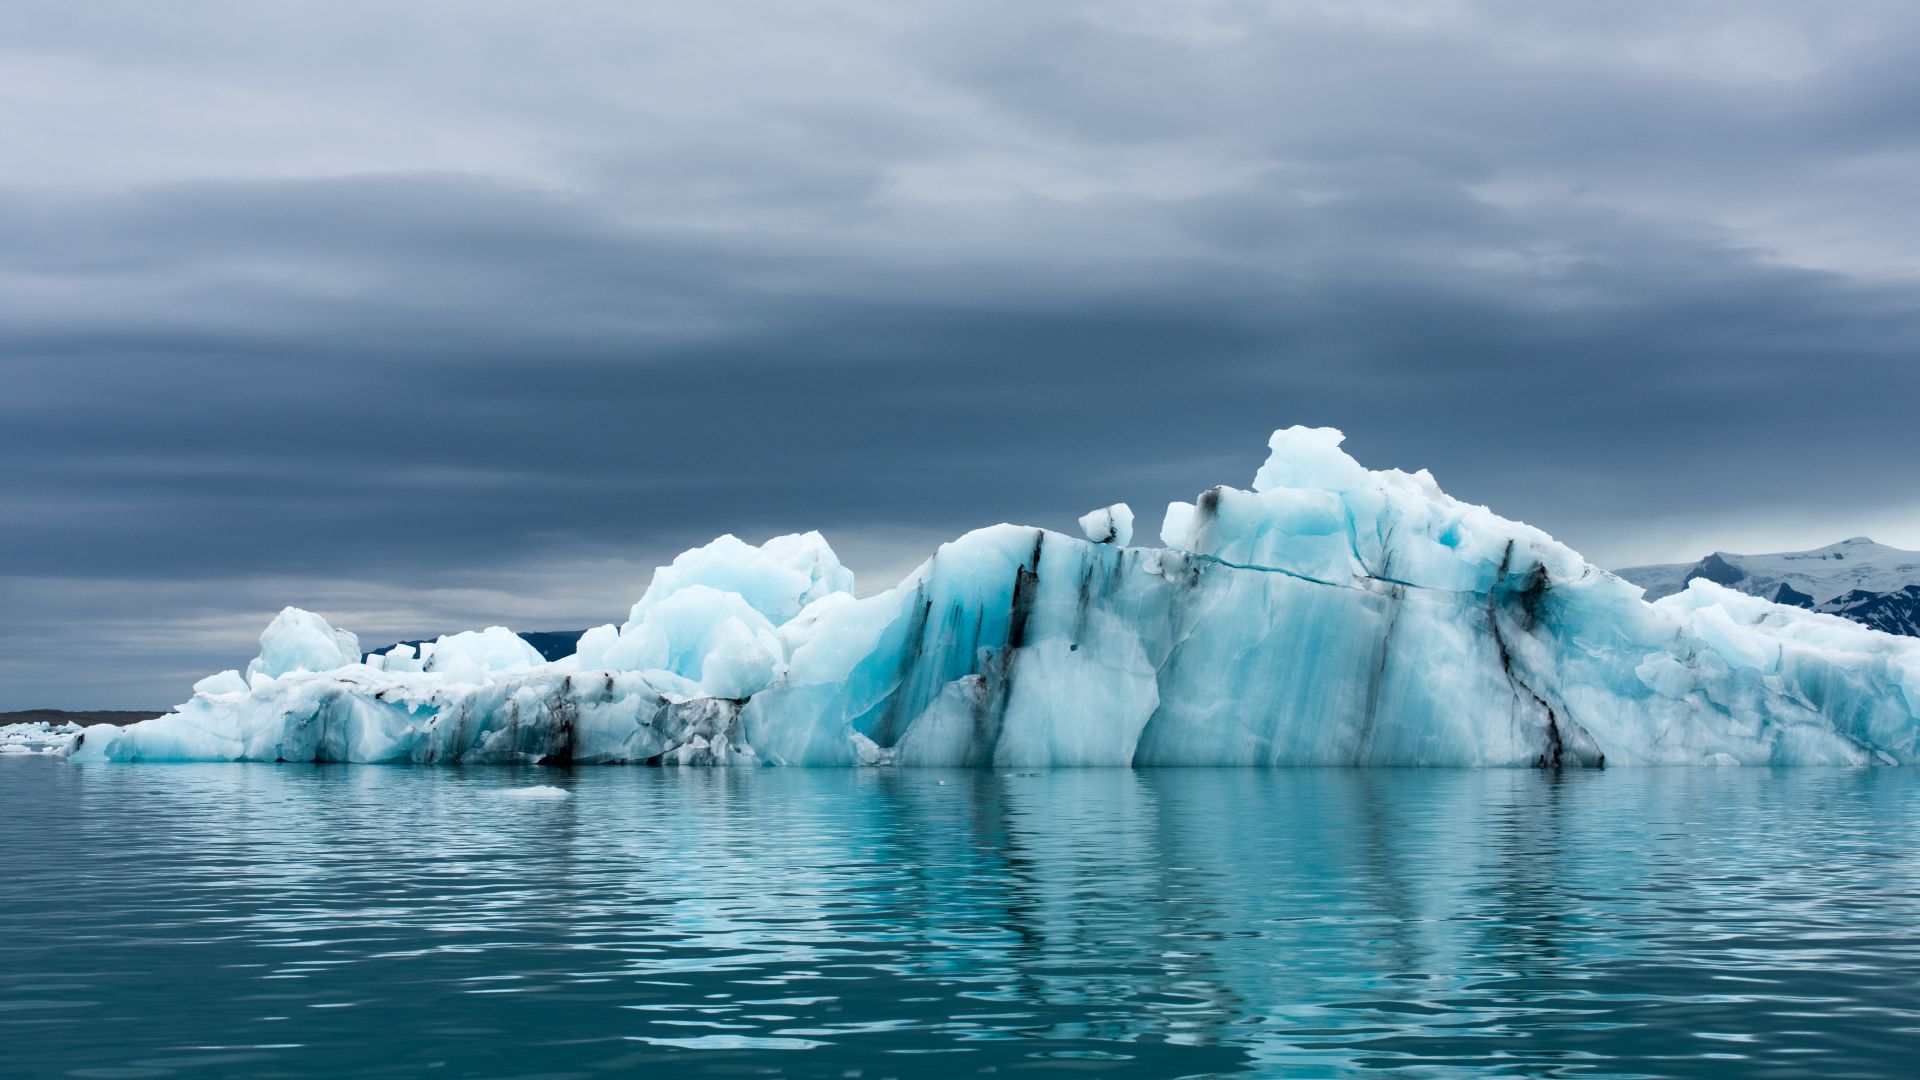 Антарктида, айсберг, Antarctica, iceberg, ocean, 5k (horizontal)